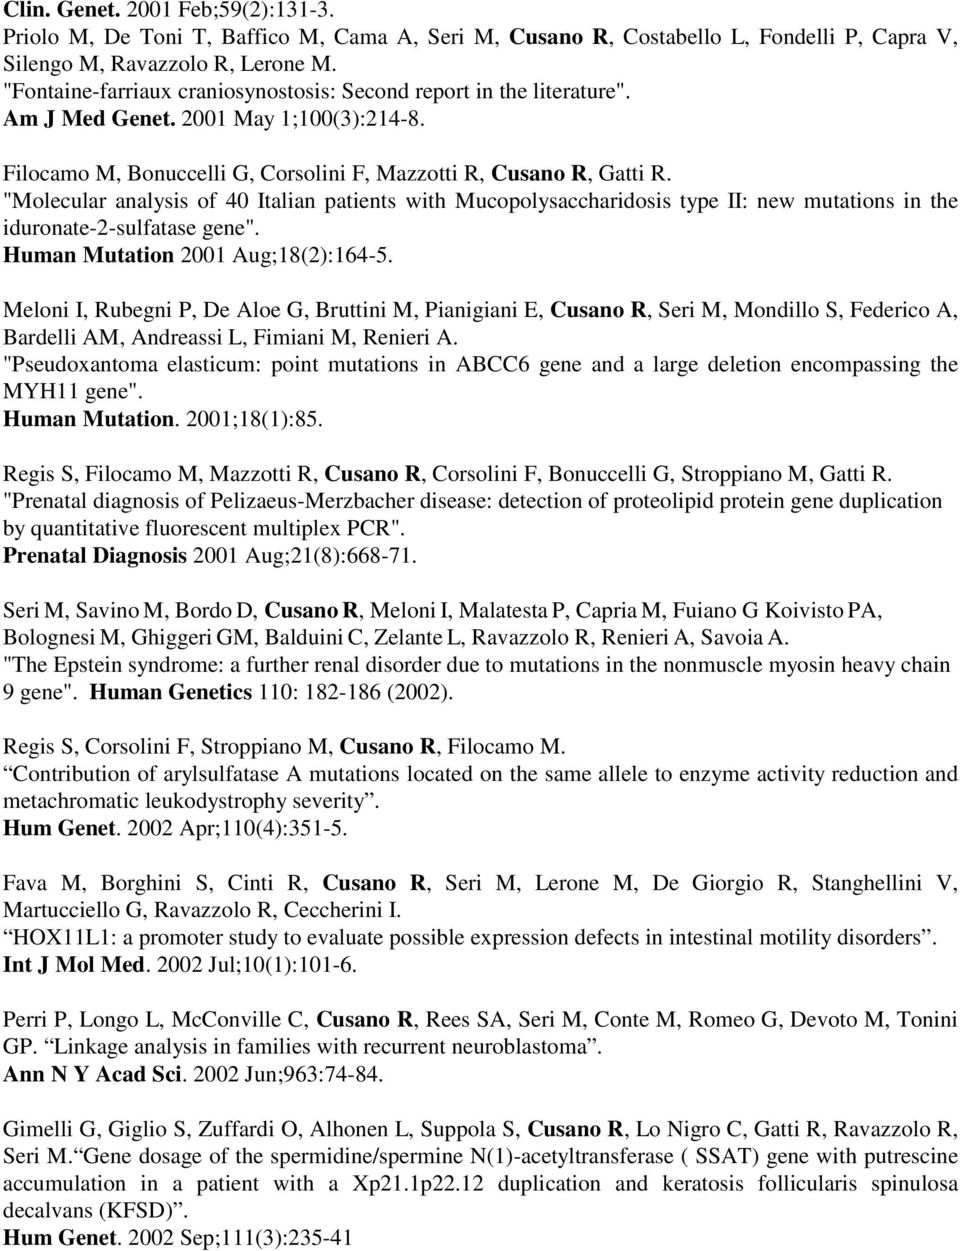 "Molecular analysis of 40 Italian patients with Mucopolysaccharidosis type II: new mutations in the iduronate-2-sulfatase gene". Human Mutation 2001 Aug;18(2):164-5.